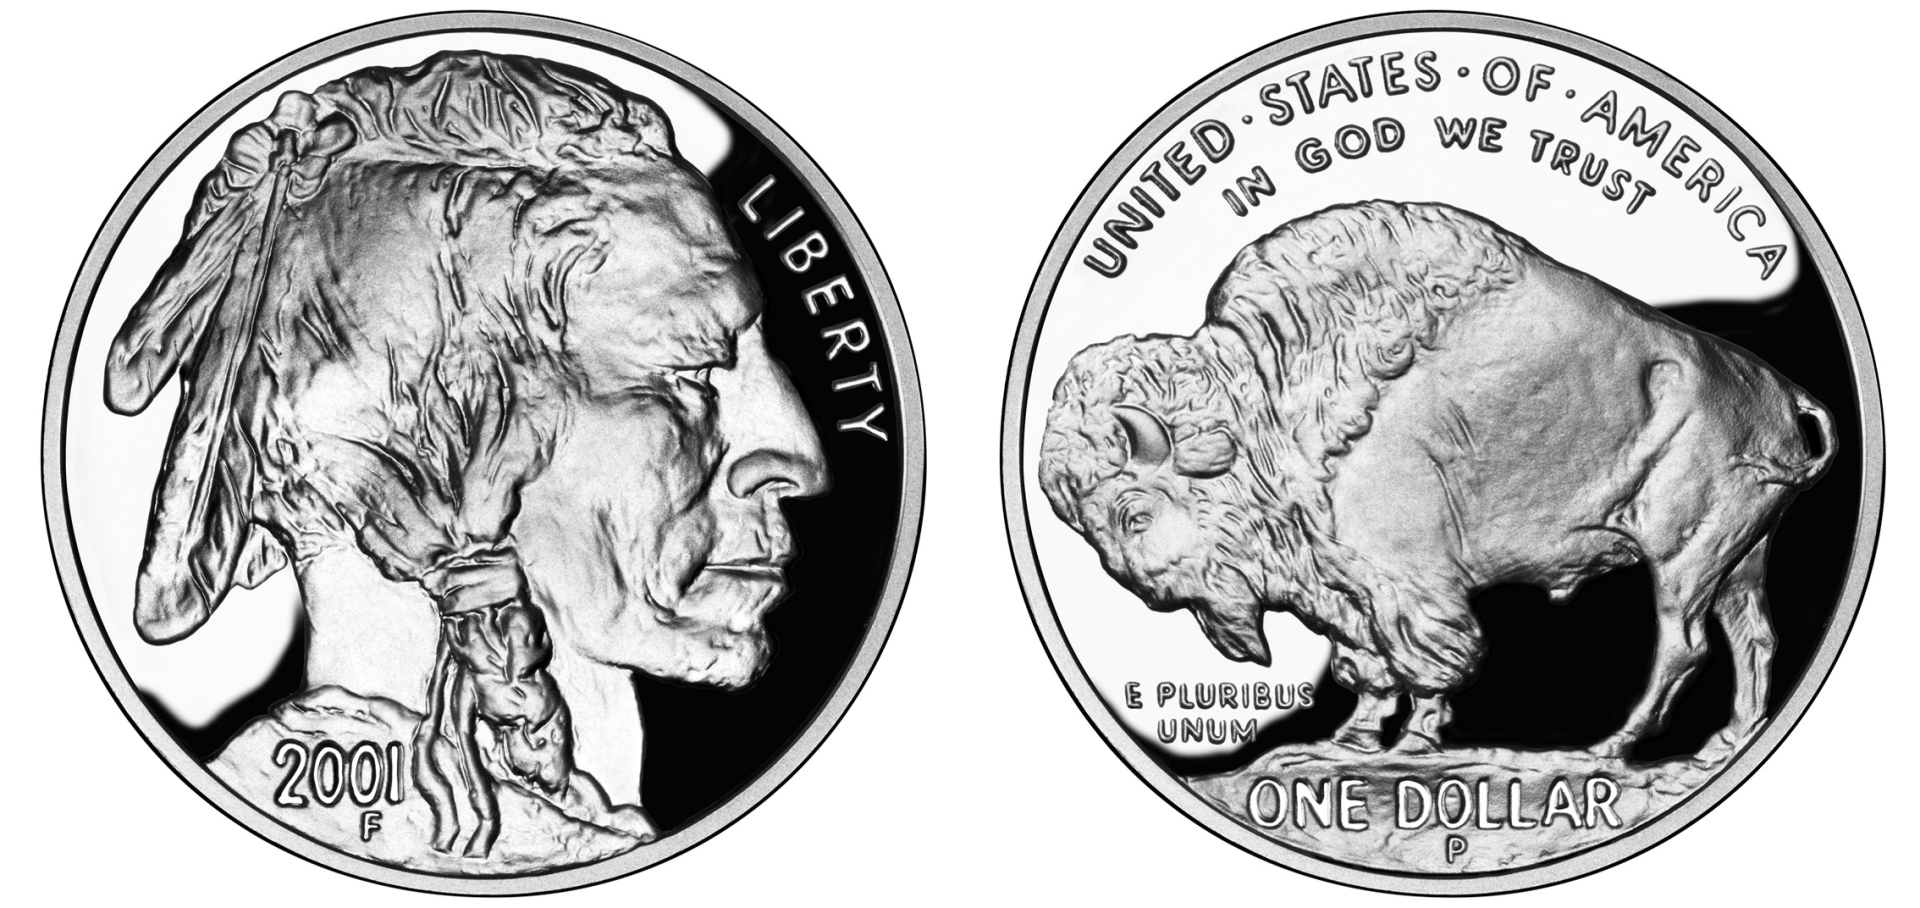 2001 Silver American Buffalo Commemorative Coin obverse and reverse